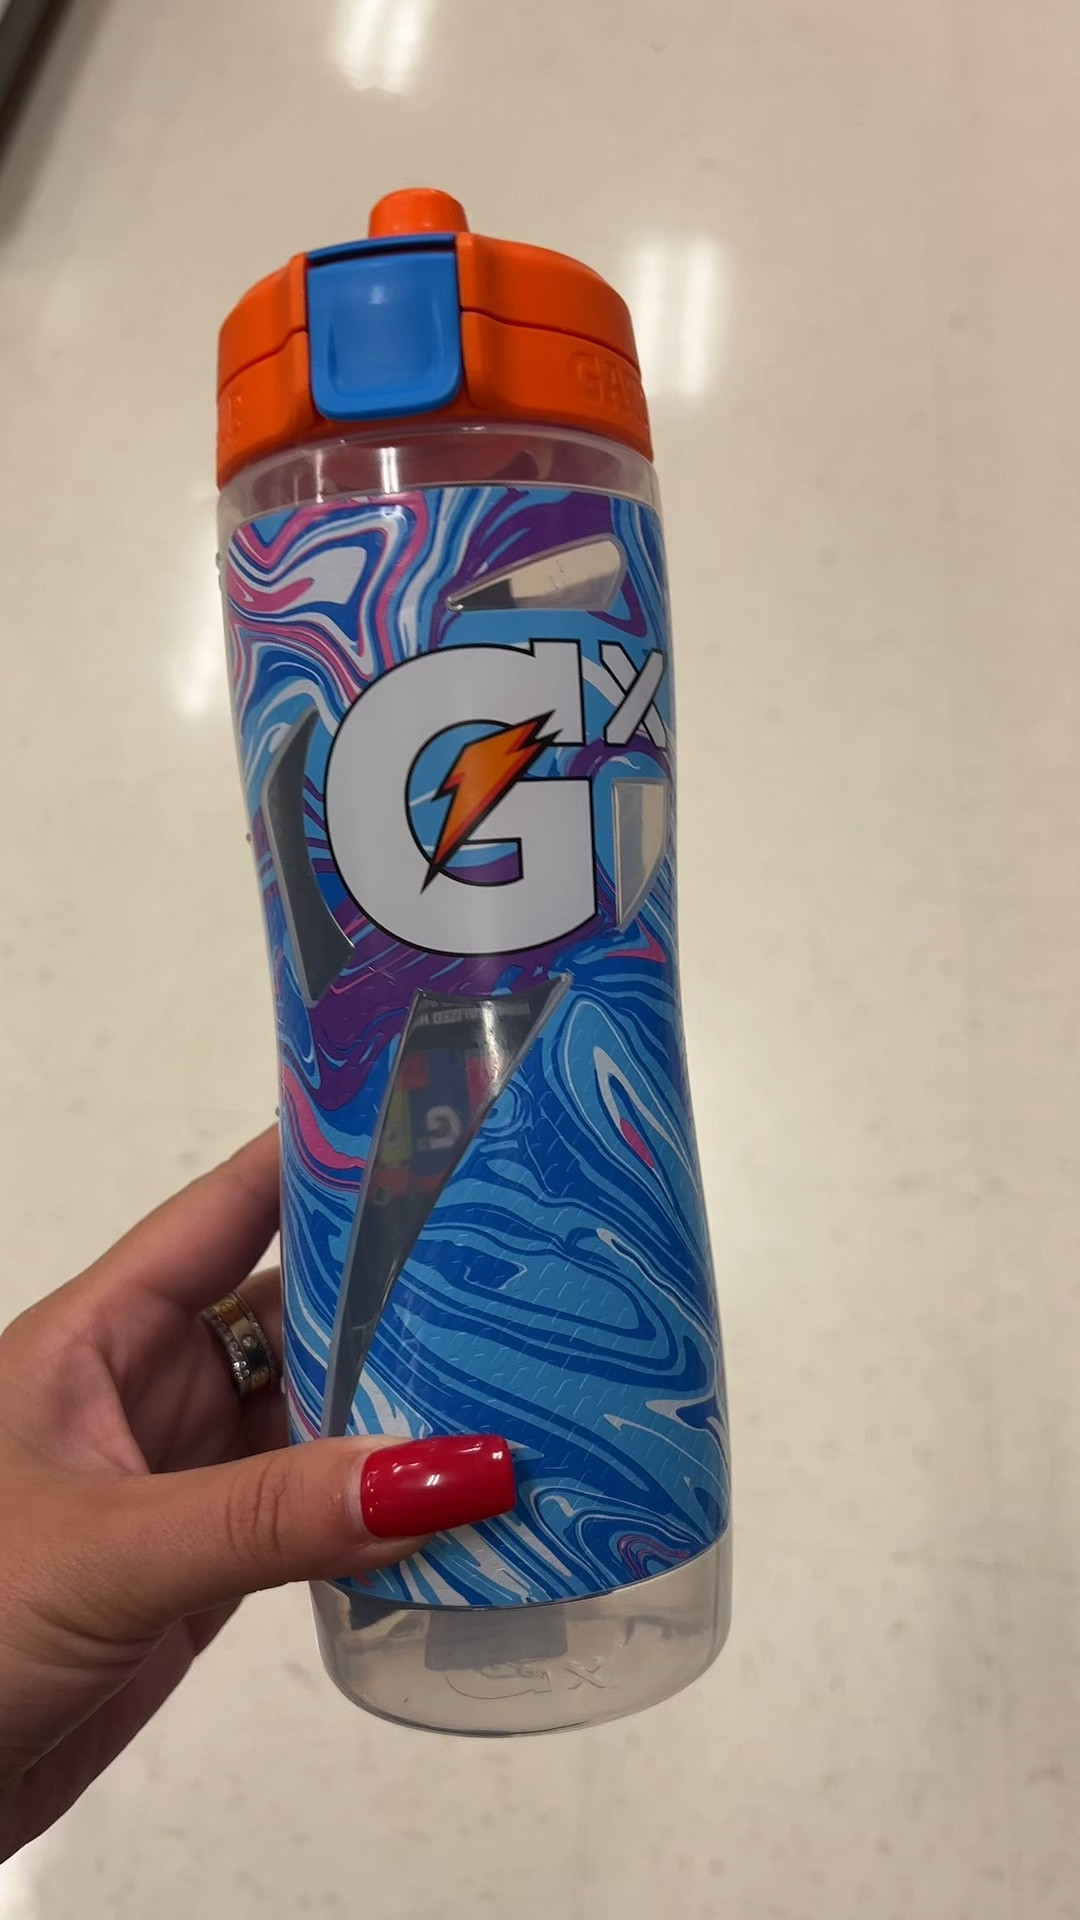 Gatorade 30oz GX Plastic Water Bottle - White